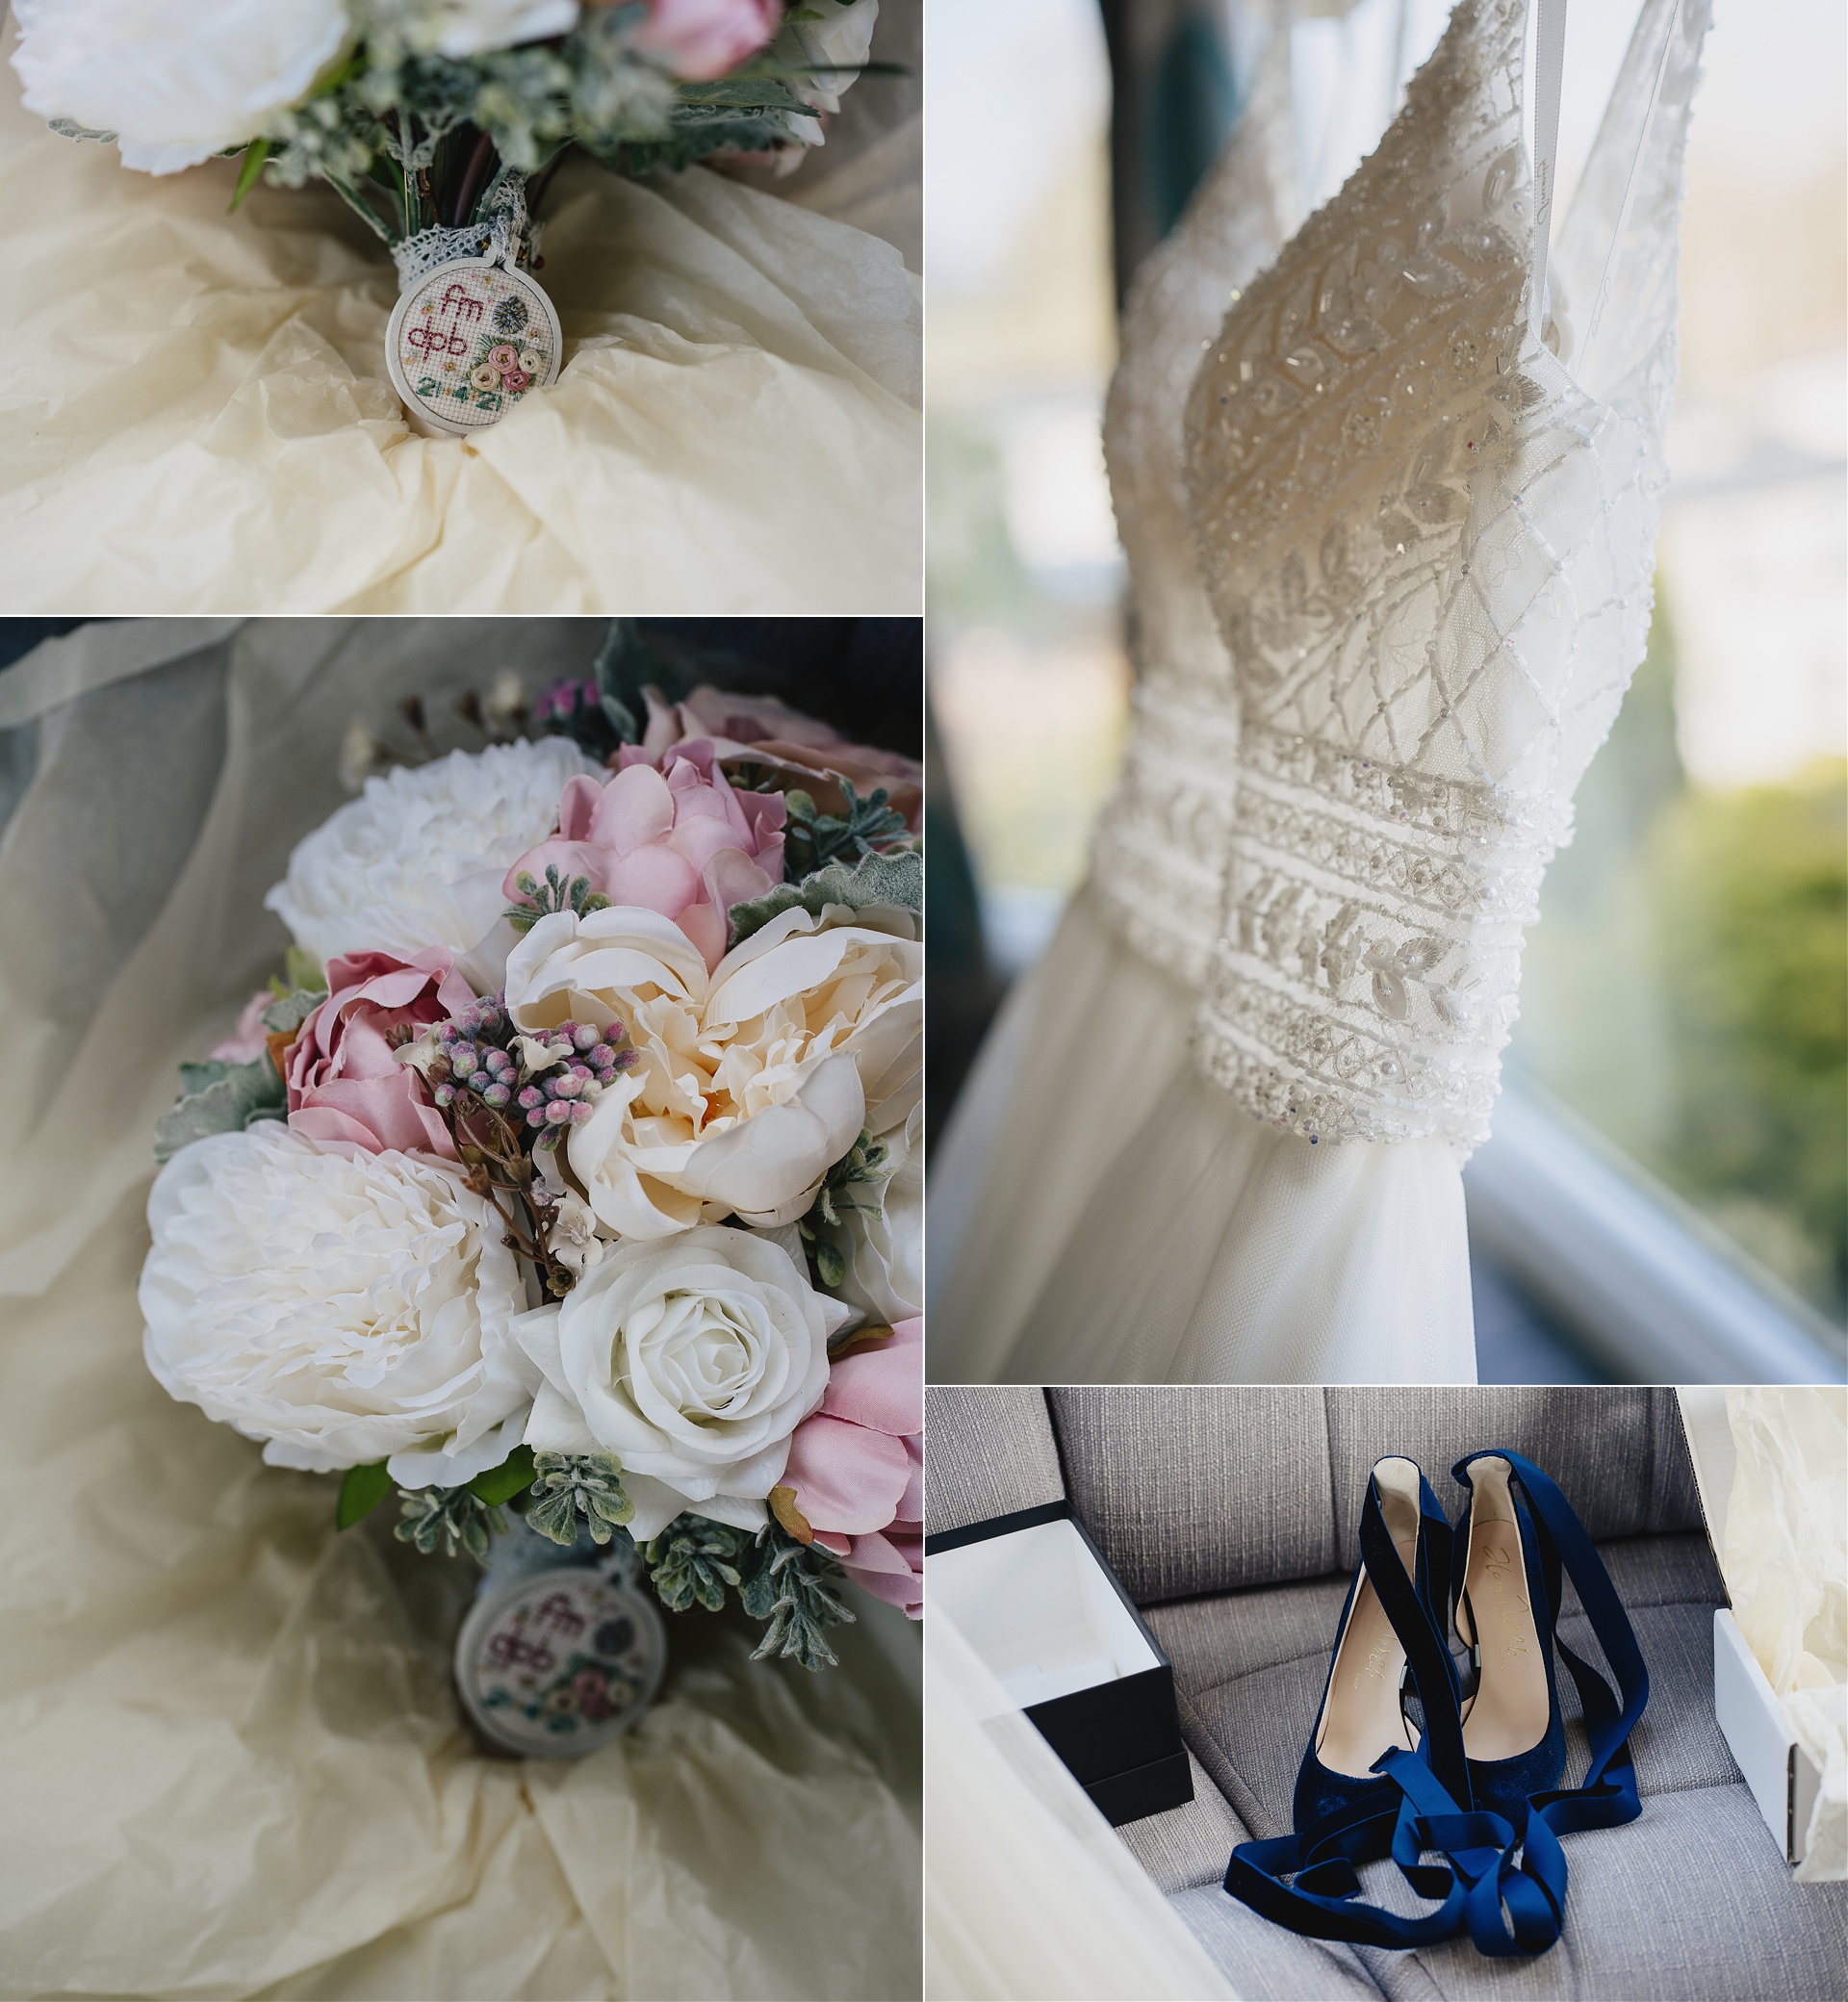 Silk flowers, wedding dress and blue velvet shoes for bride's wedding day